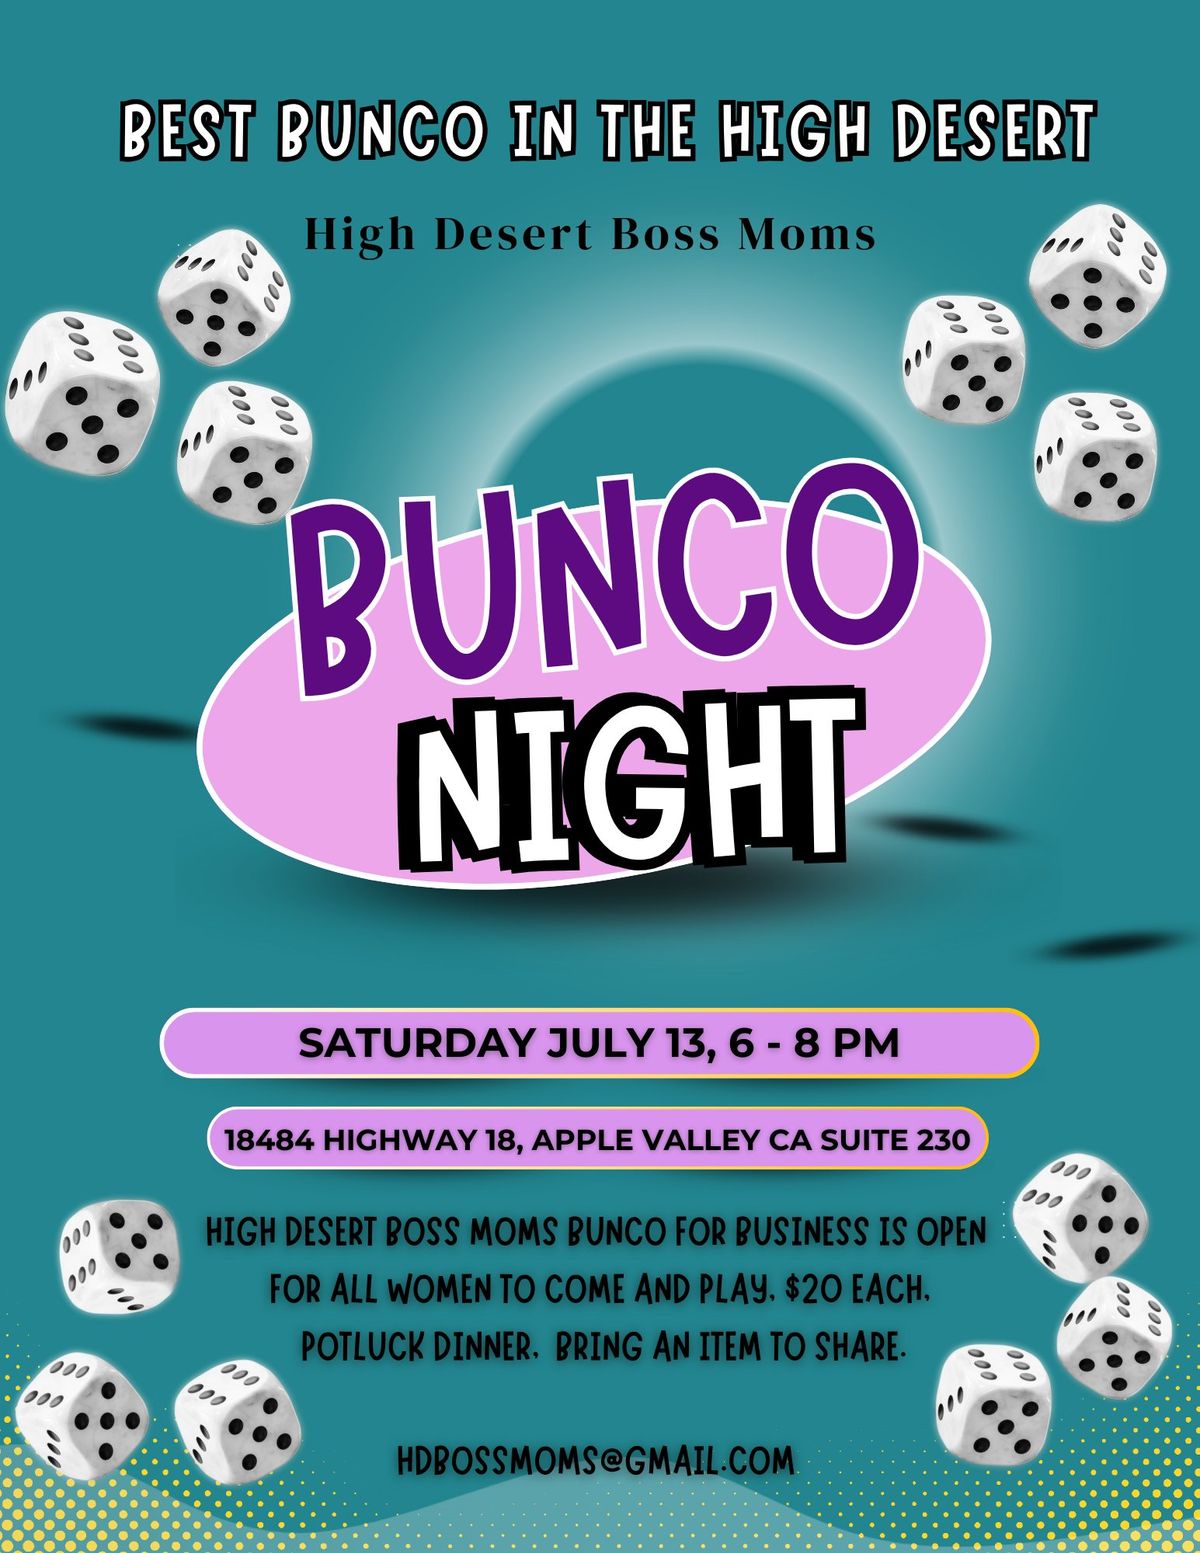 JULY - BEST BUNCO IN THE HIGH DESERT!